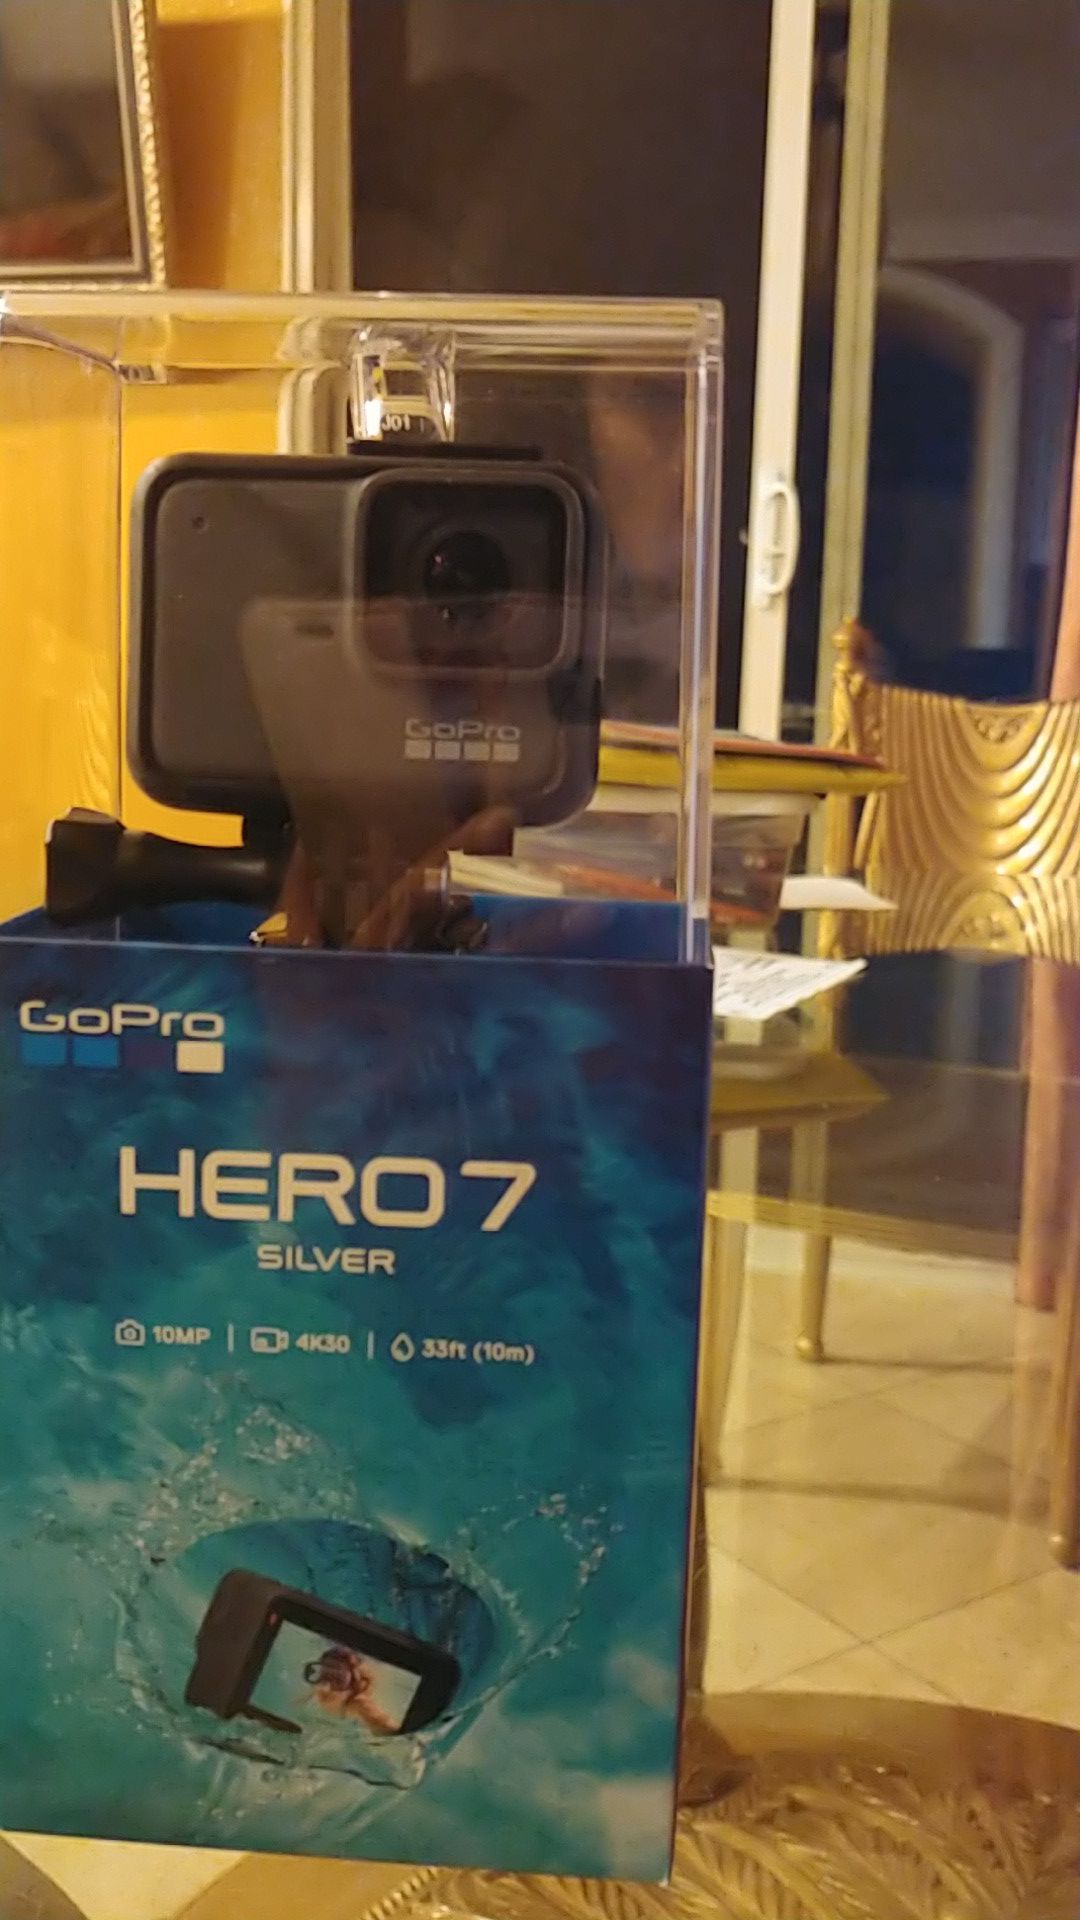 Brand new GoPro Hero 7 silver